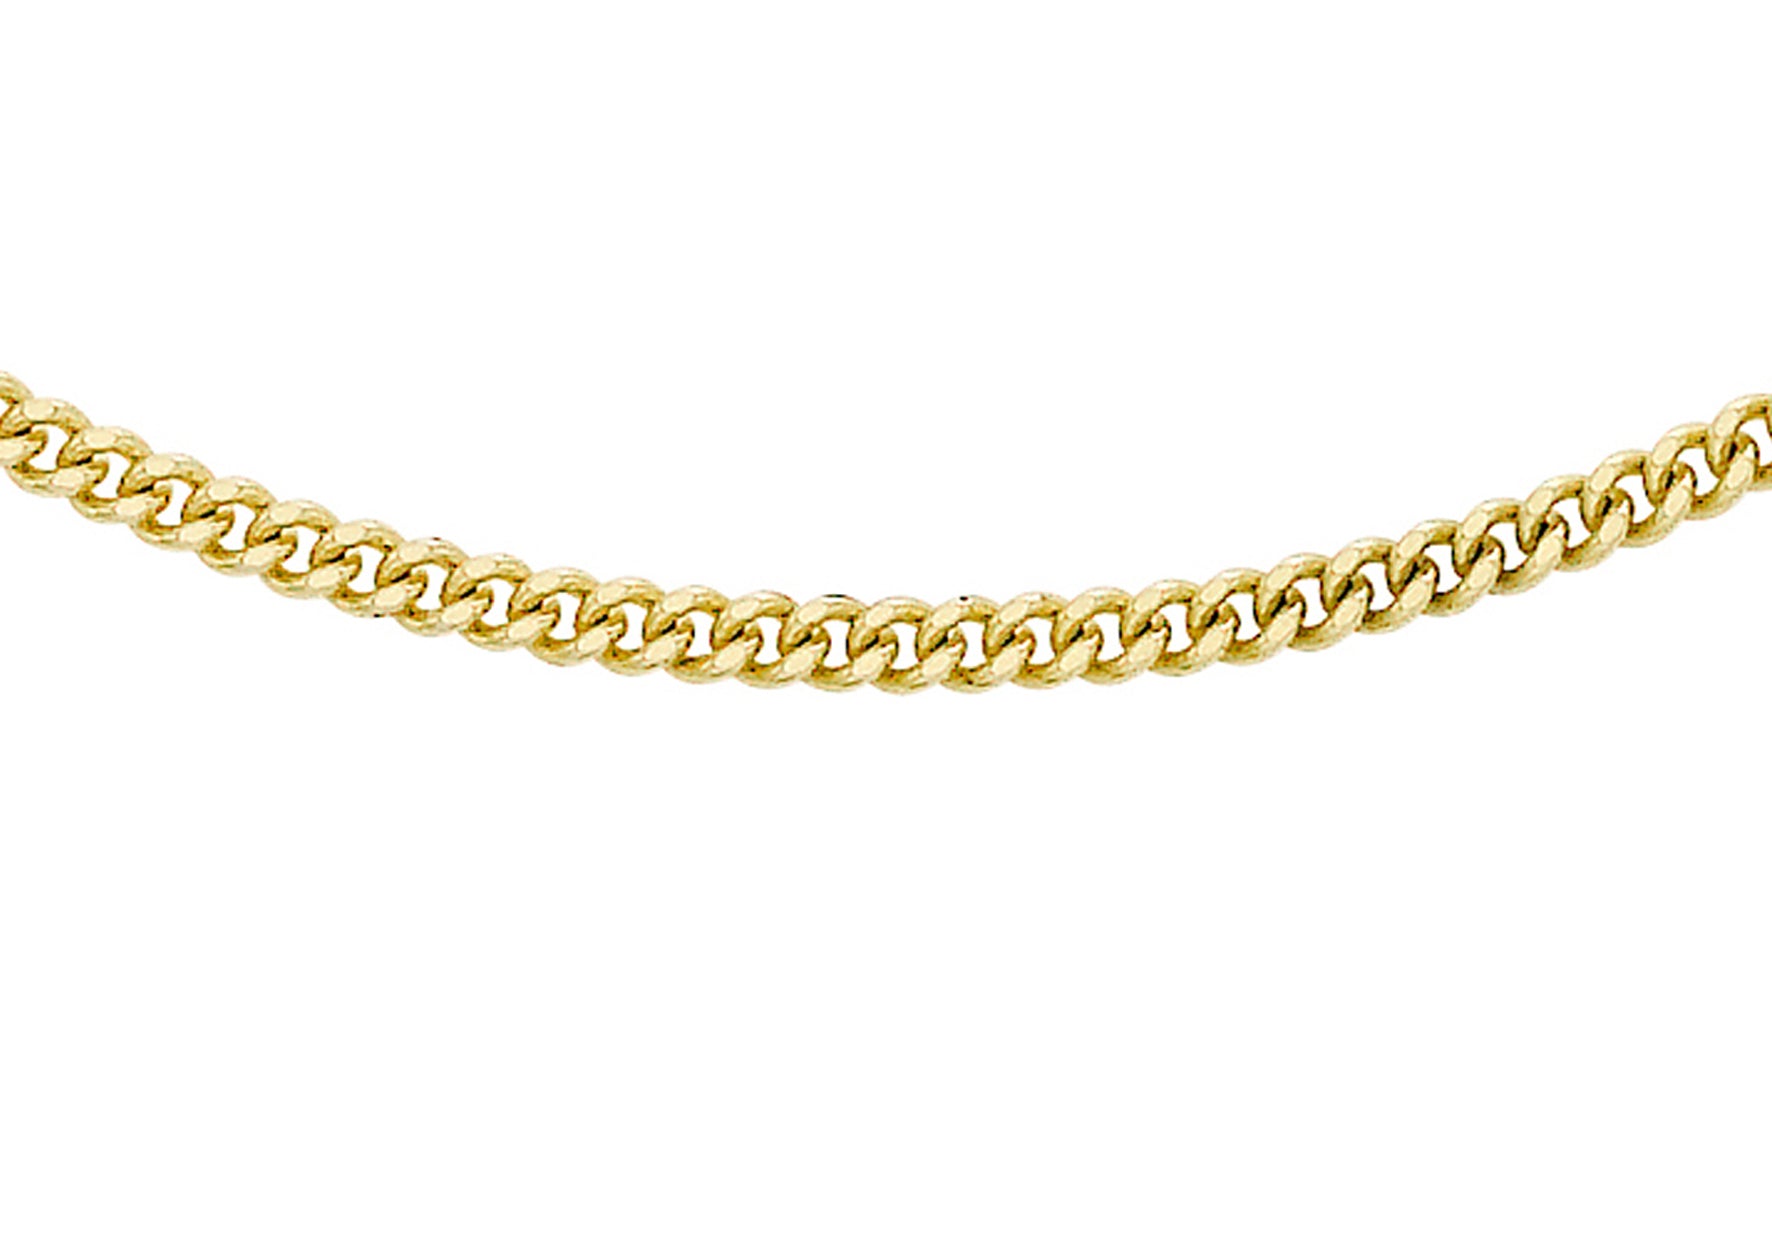 9ct Fine Yellow Gold Spiga Chain